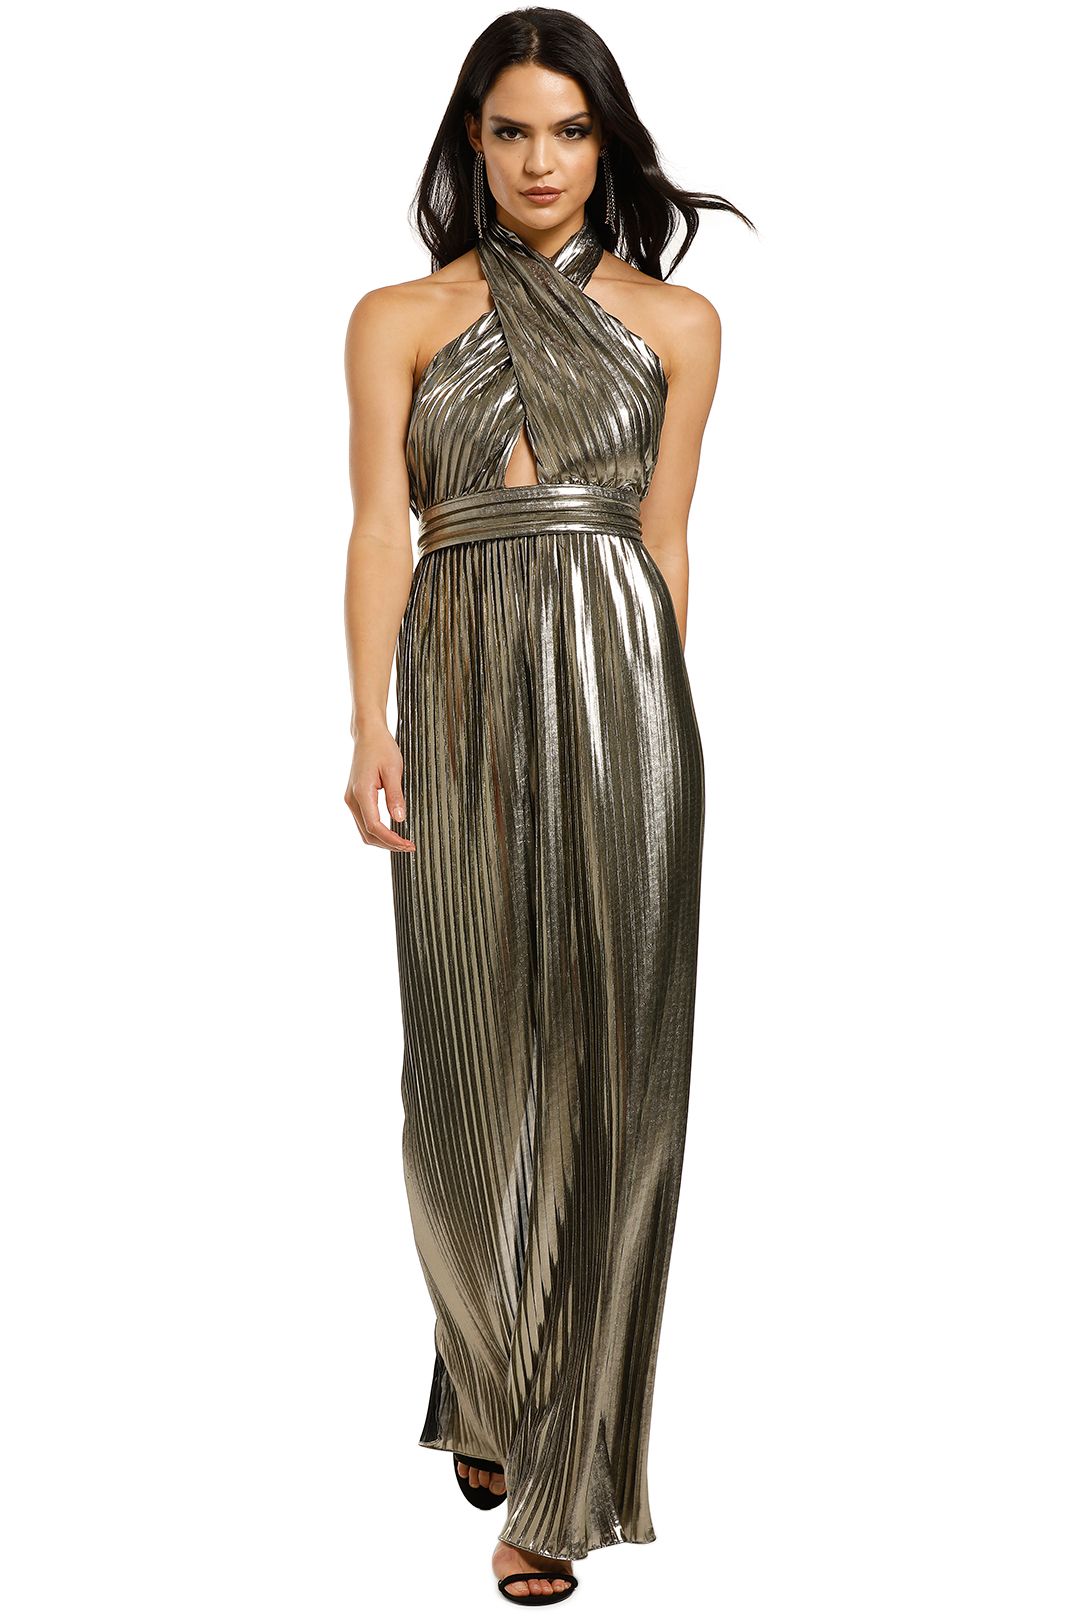 The Monroe Gold Gown by Carla Zampatti for Hire | GlamCorner